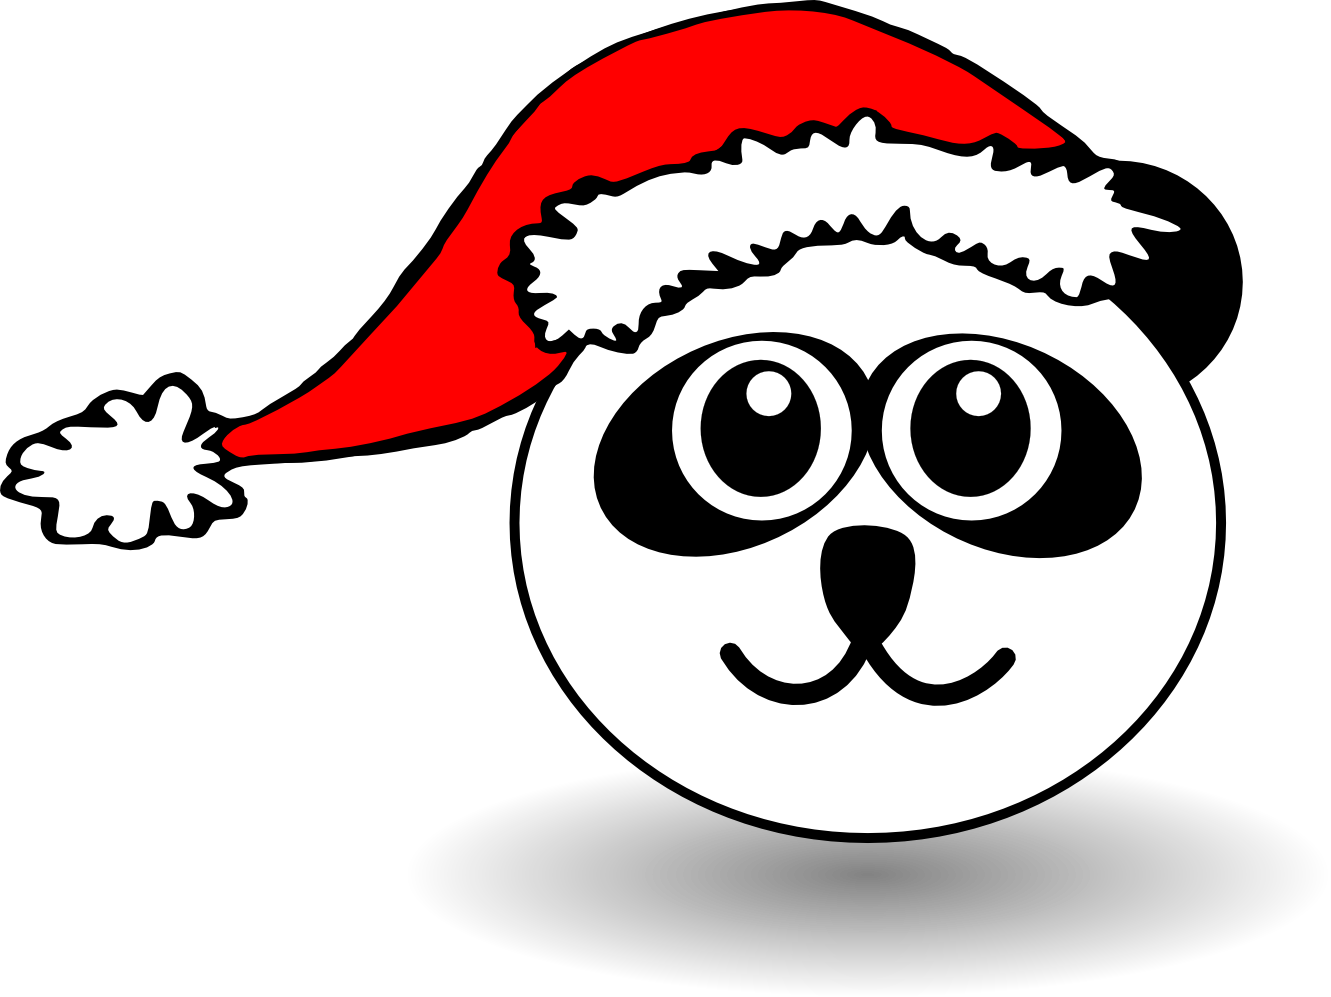 palomaironique Panda 1 Head Cartoon with Santa hat ...